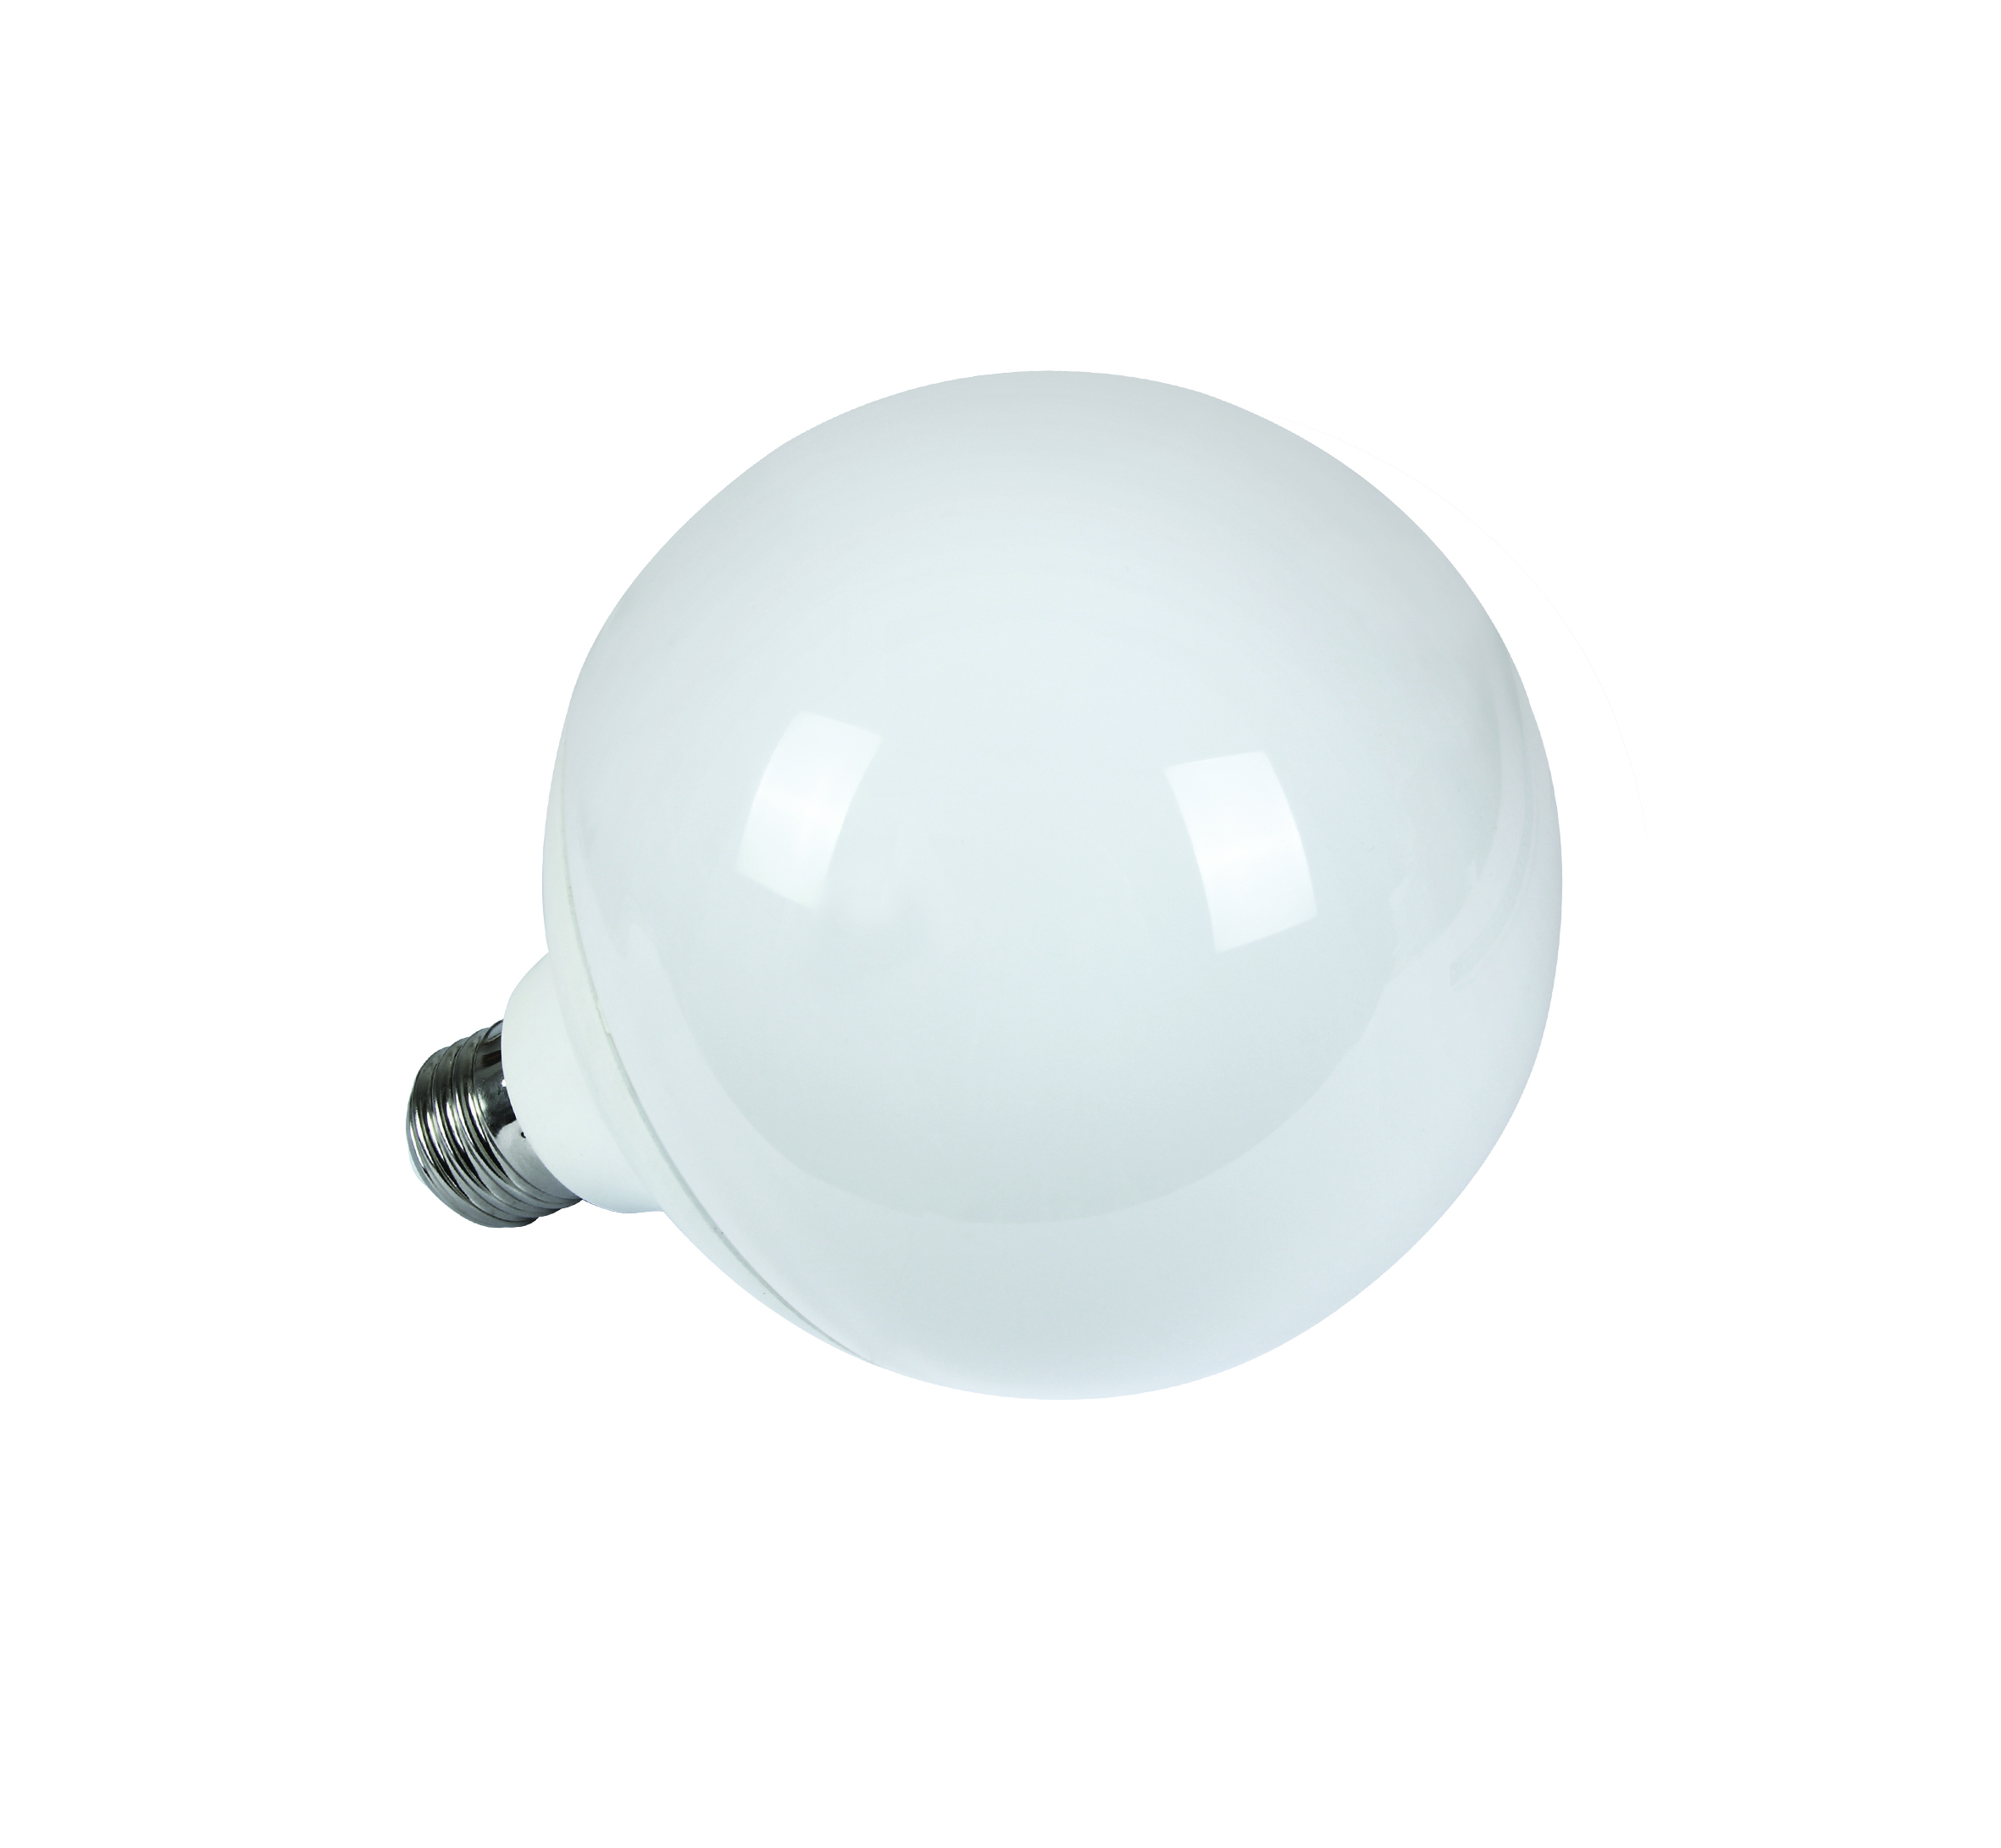 LED Globe lamp 20W, 6000K, 1800lm, E27, G120, 230V, matt